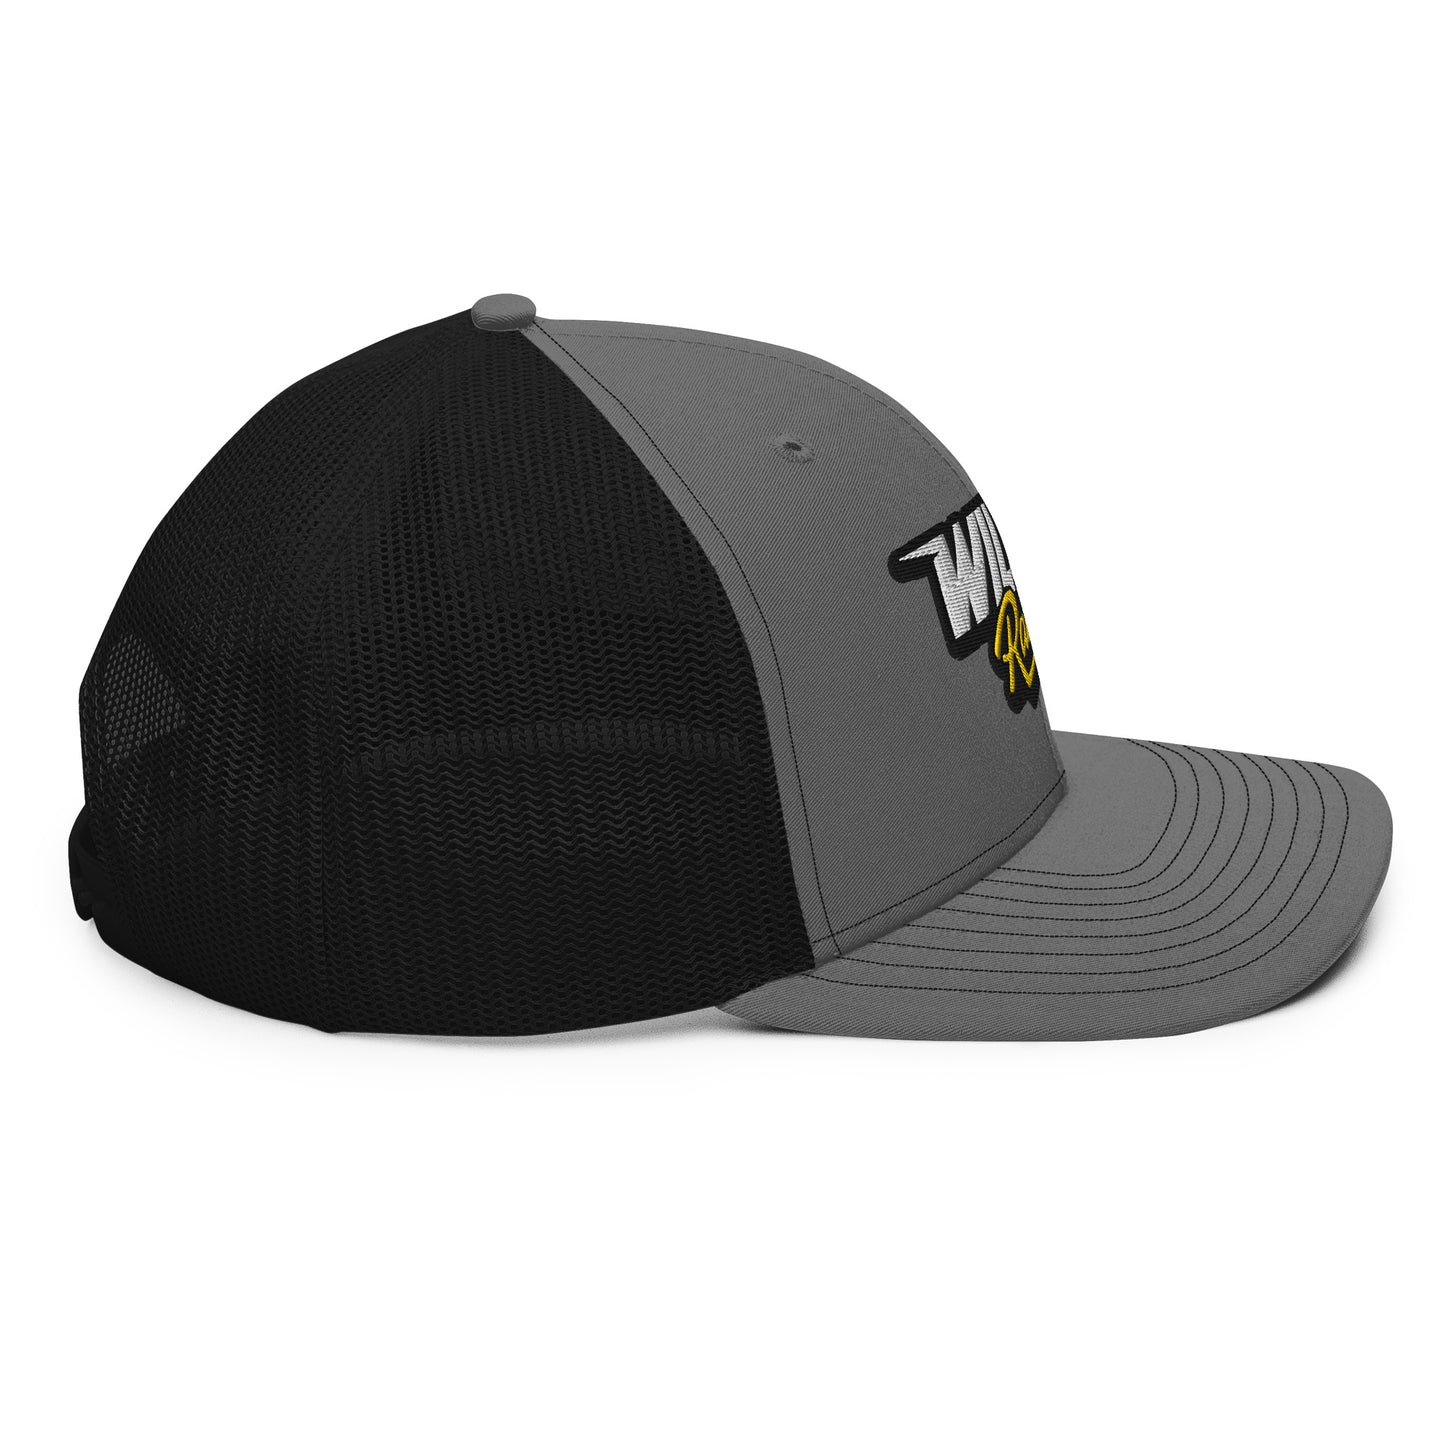 Wilson Racing Logo Richardson Snapback Hat